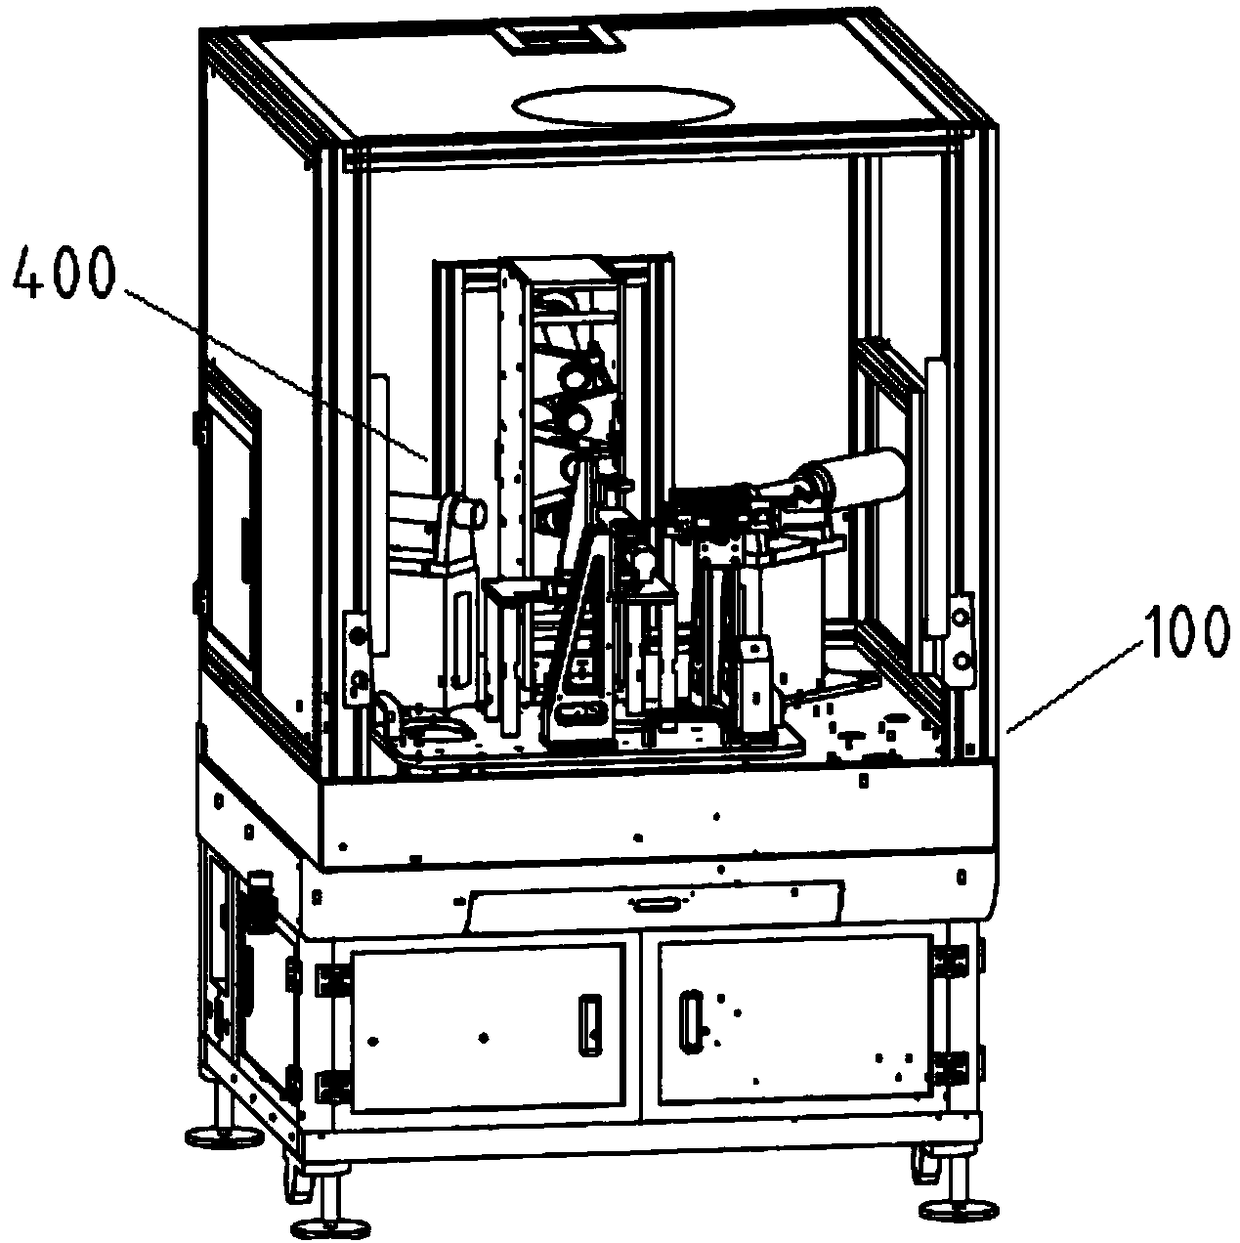 Alignment machine for laser level meter